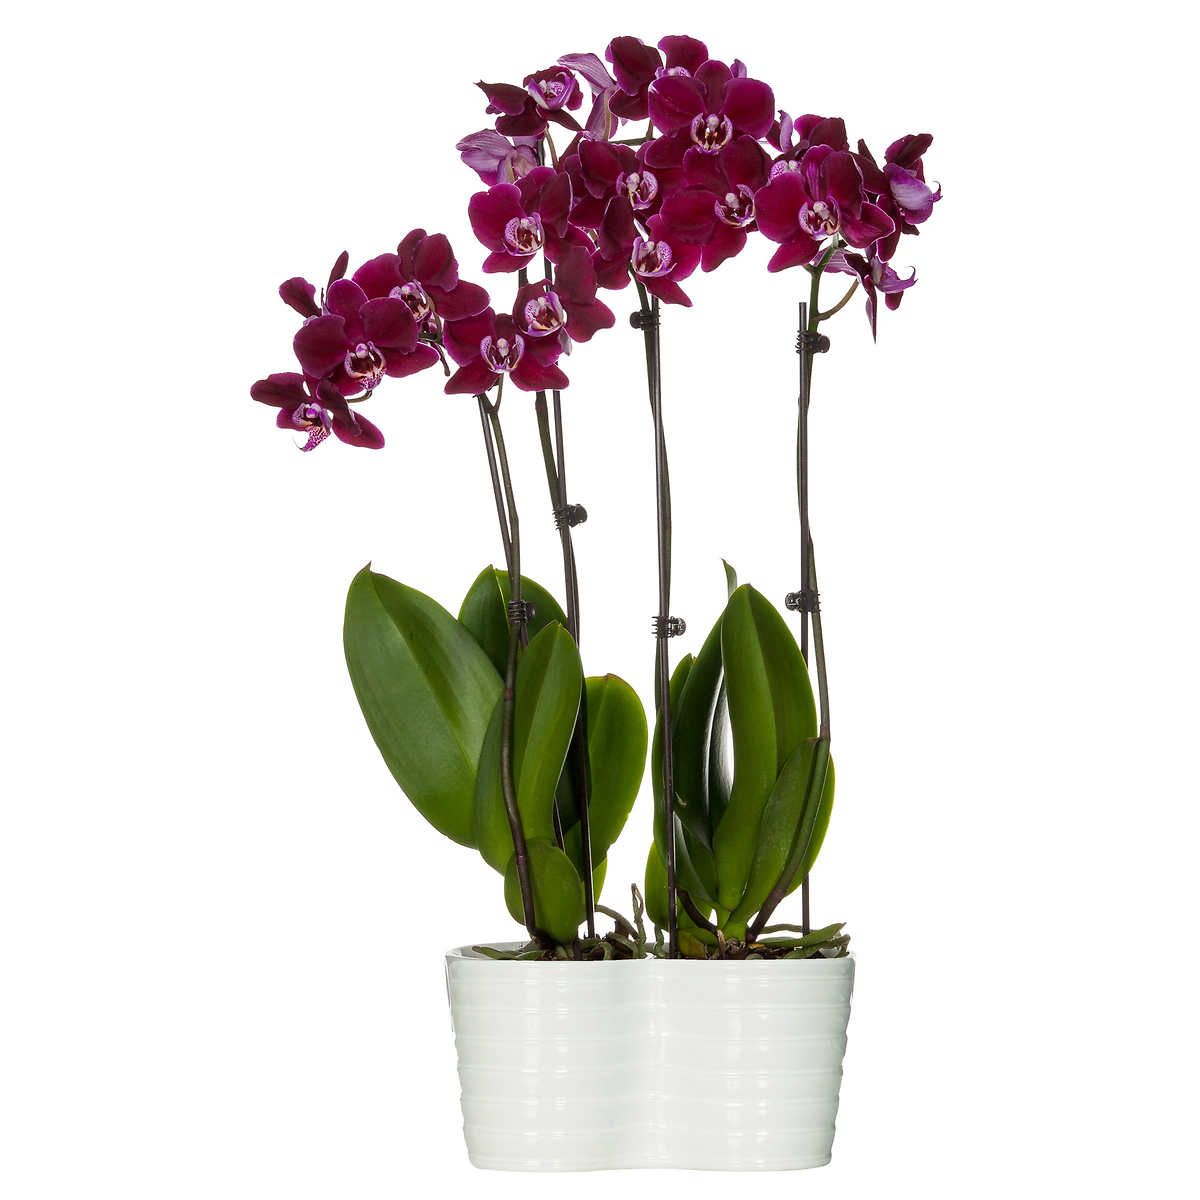 Details about   orchid plants for sale 